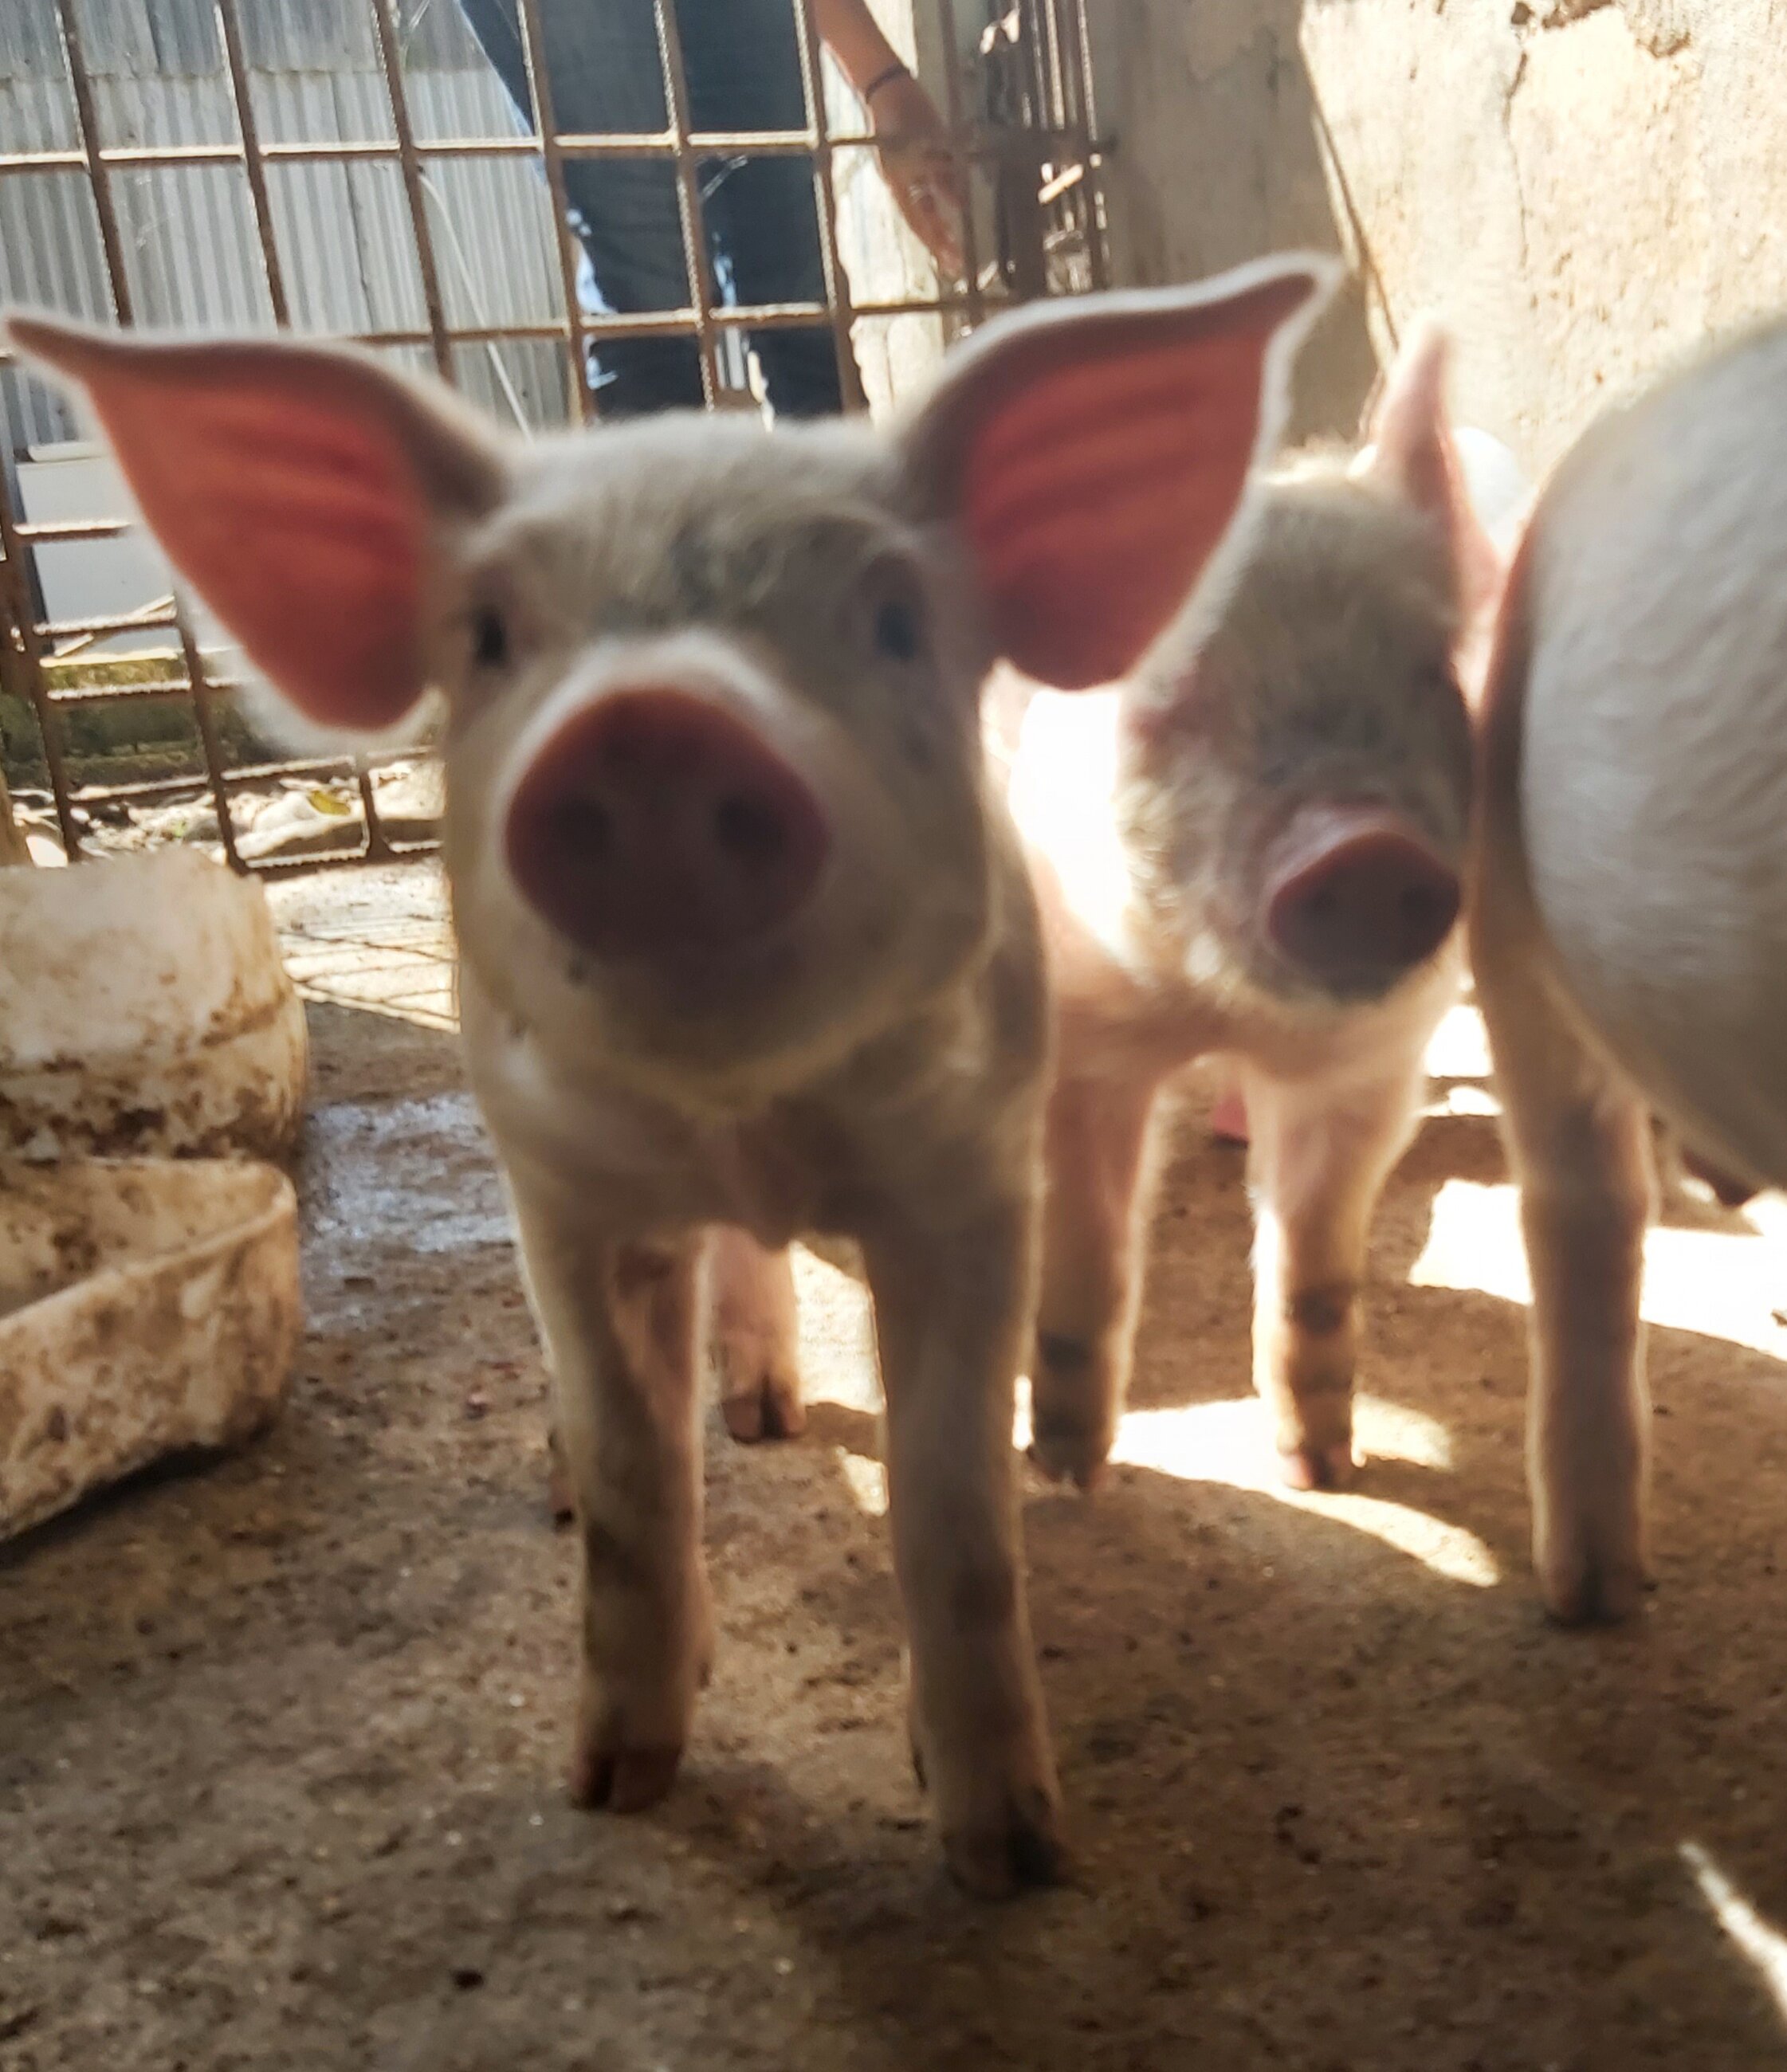 Visiting the local pig farm 